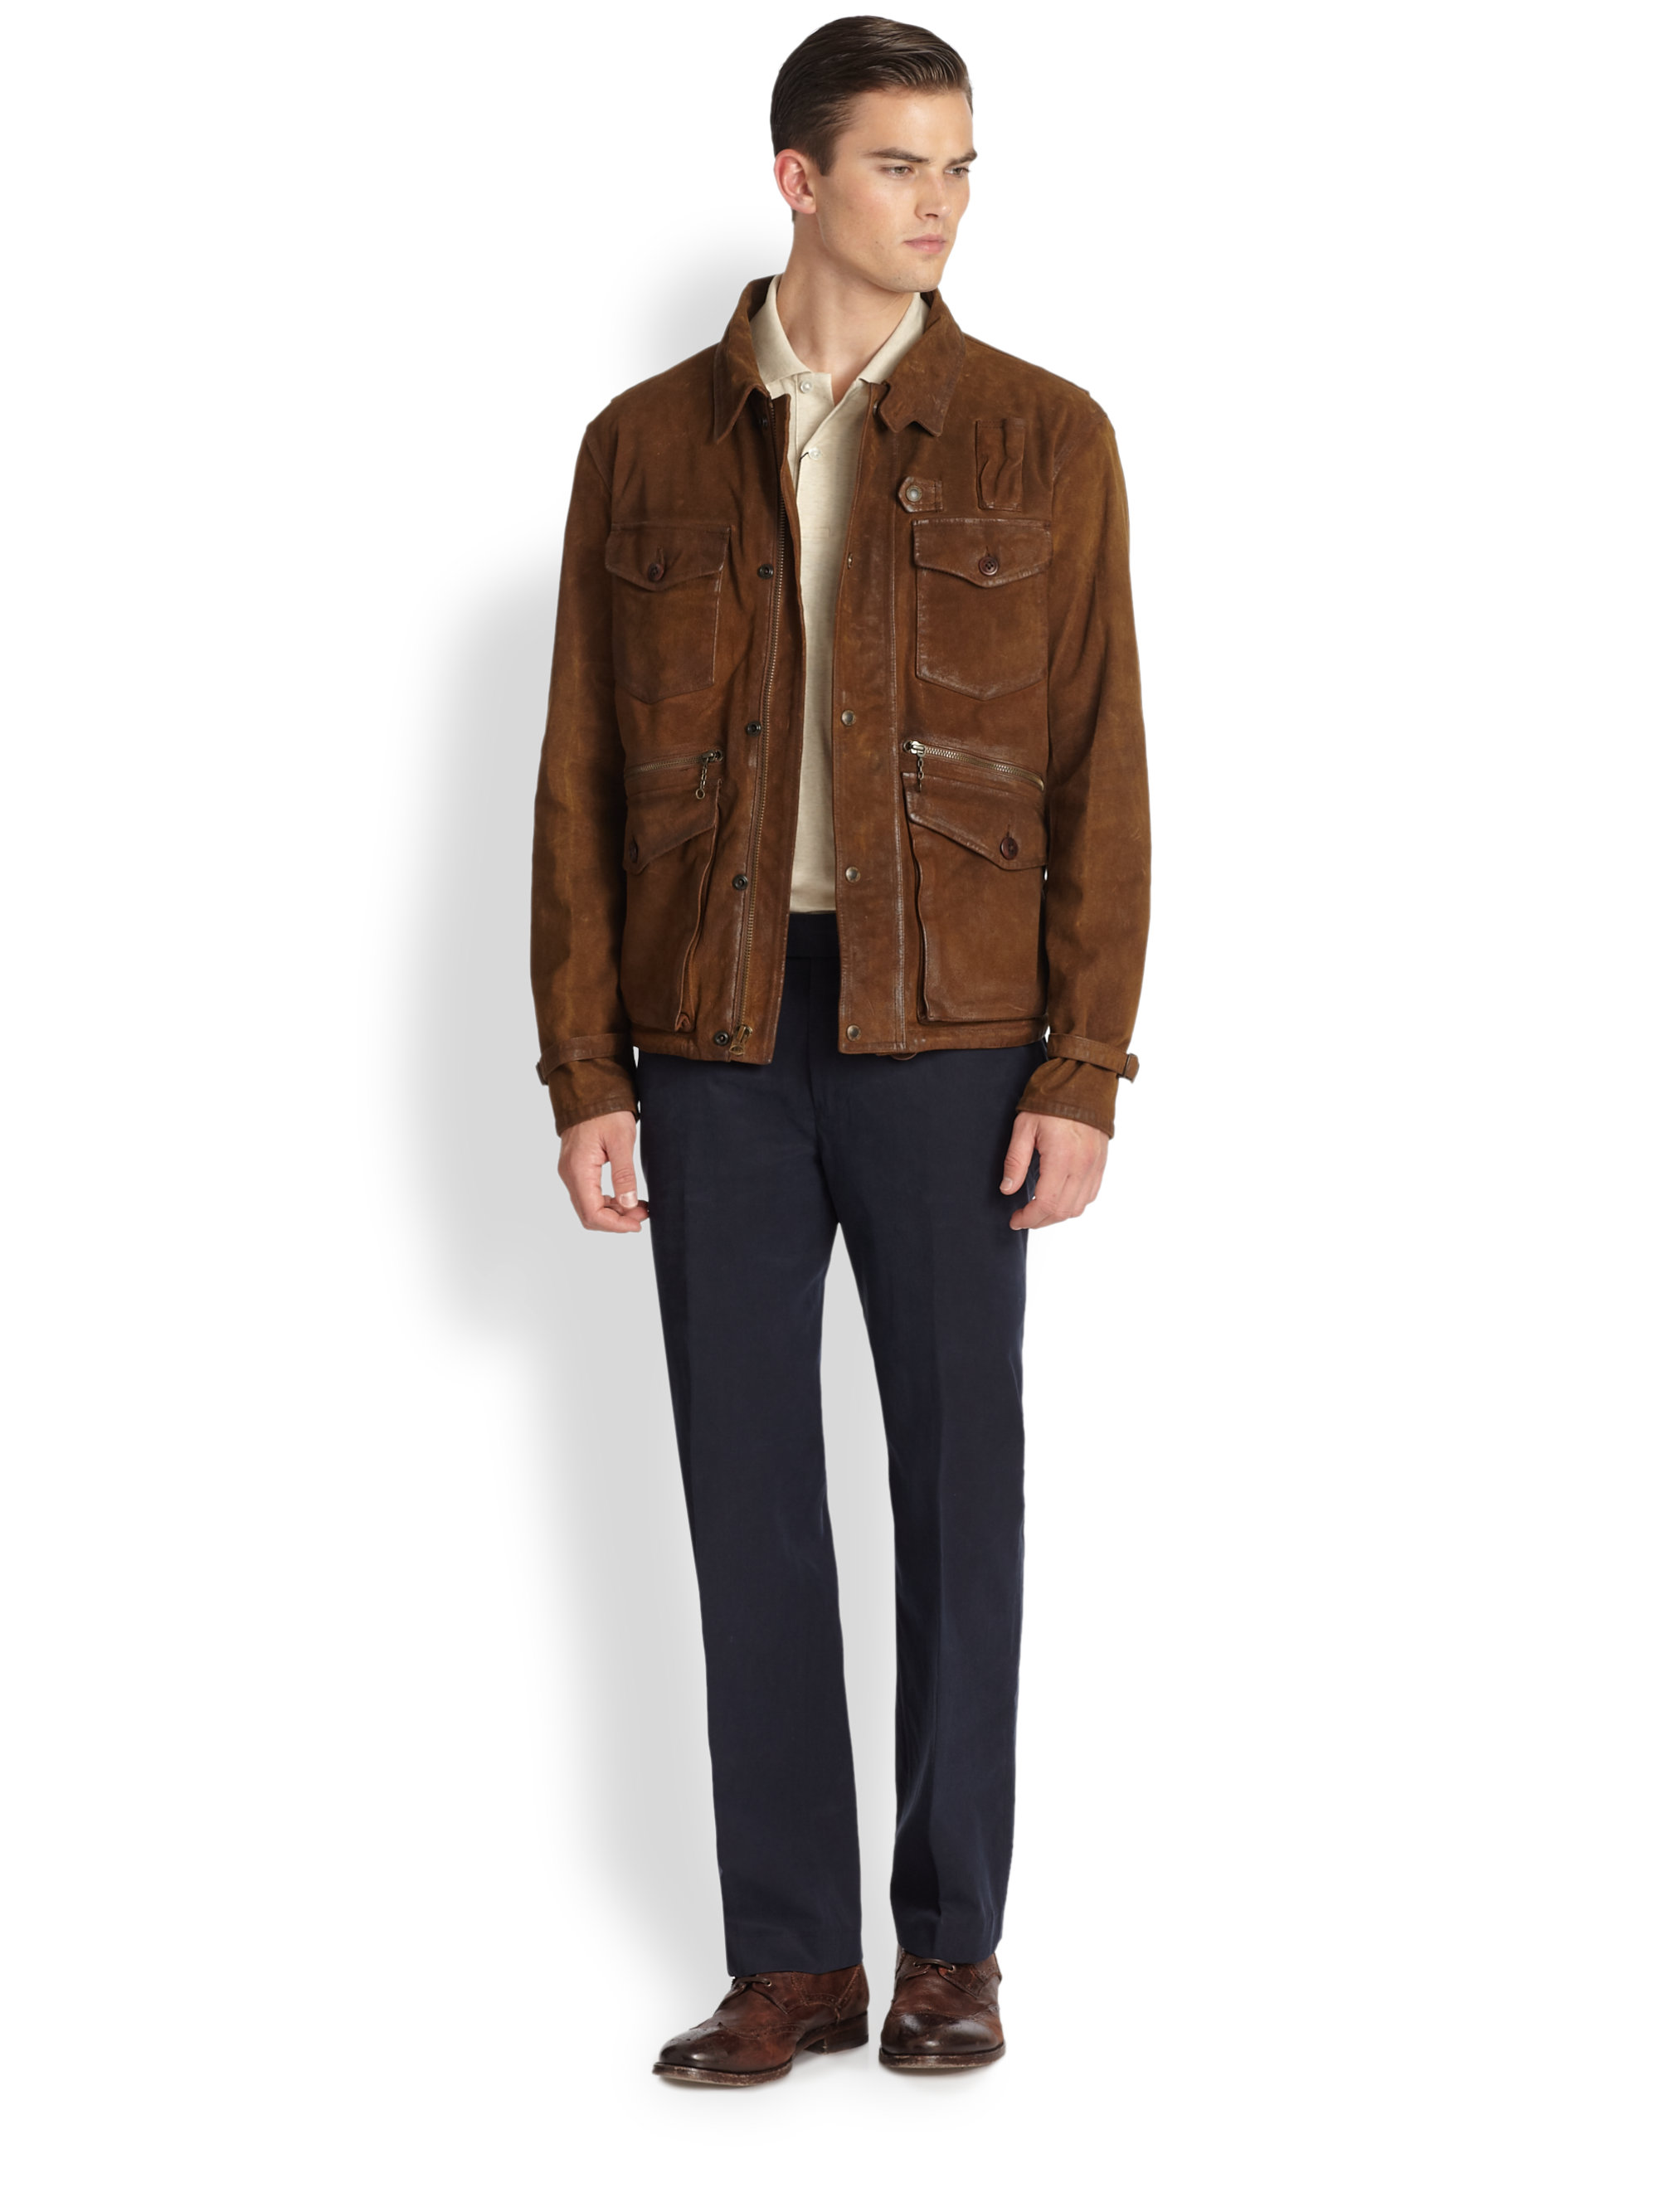 Polo Ralph Lauren Suede Utility Jacket in Brown for Men - Lyst